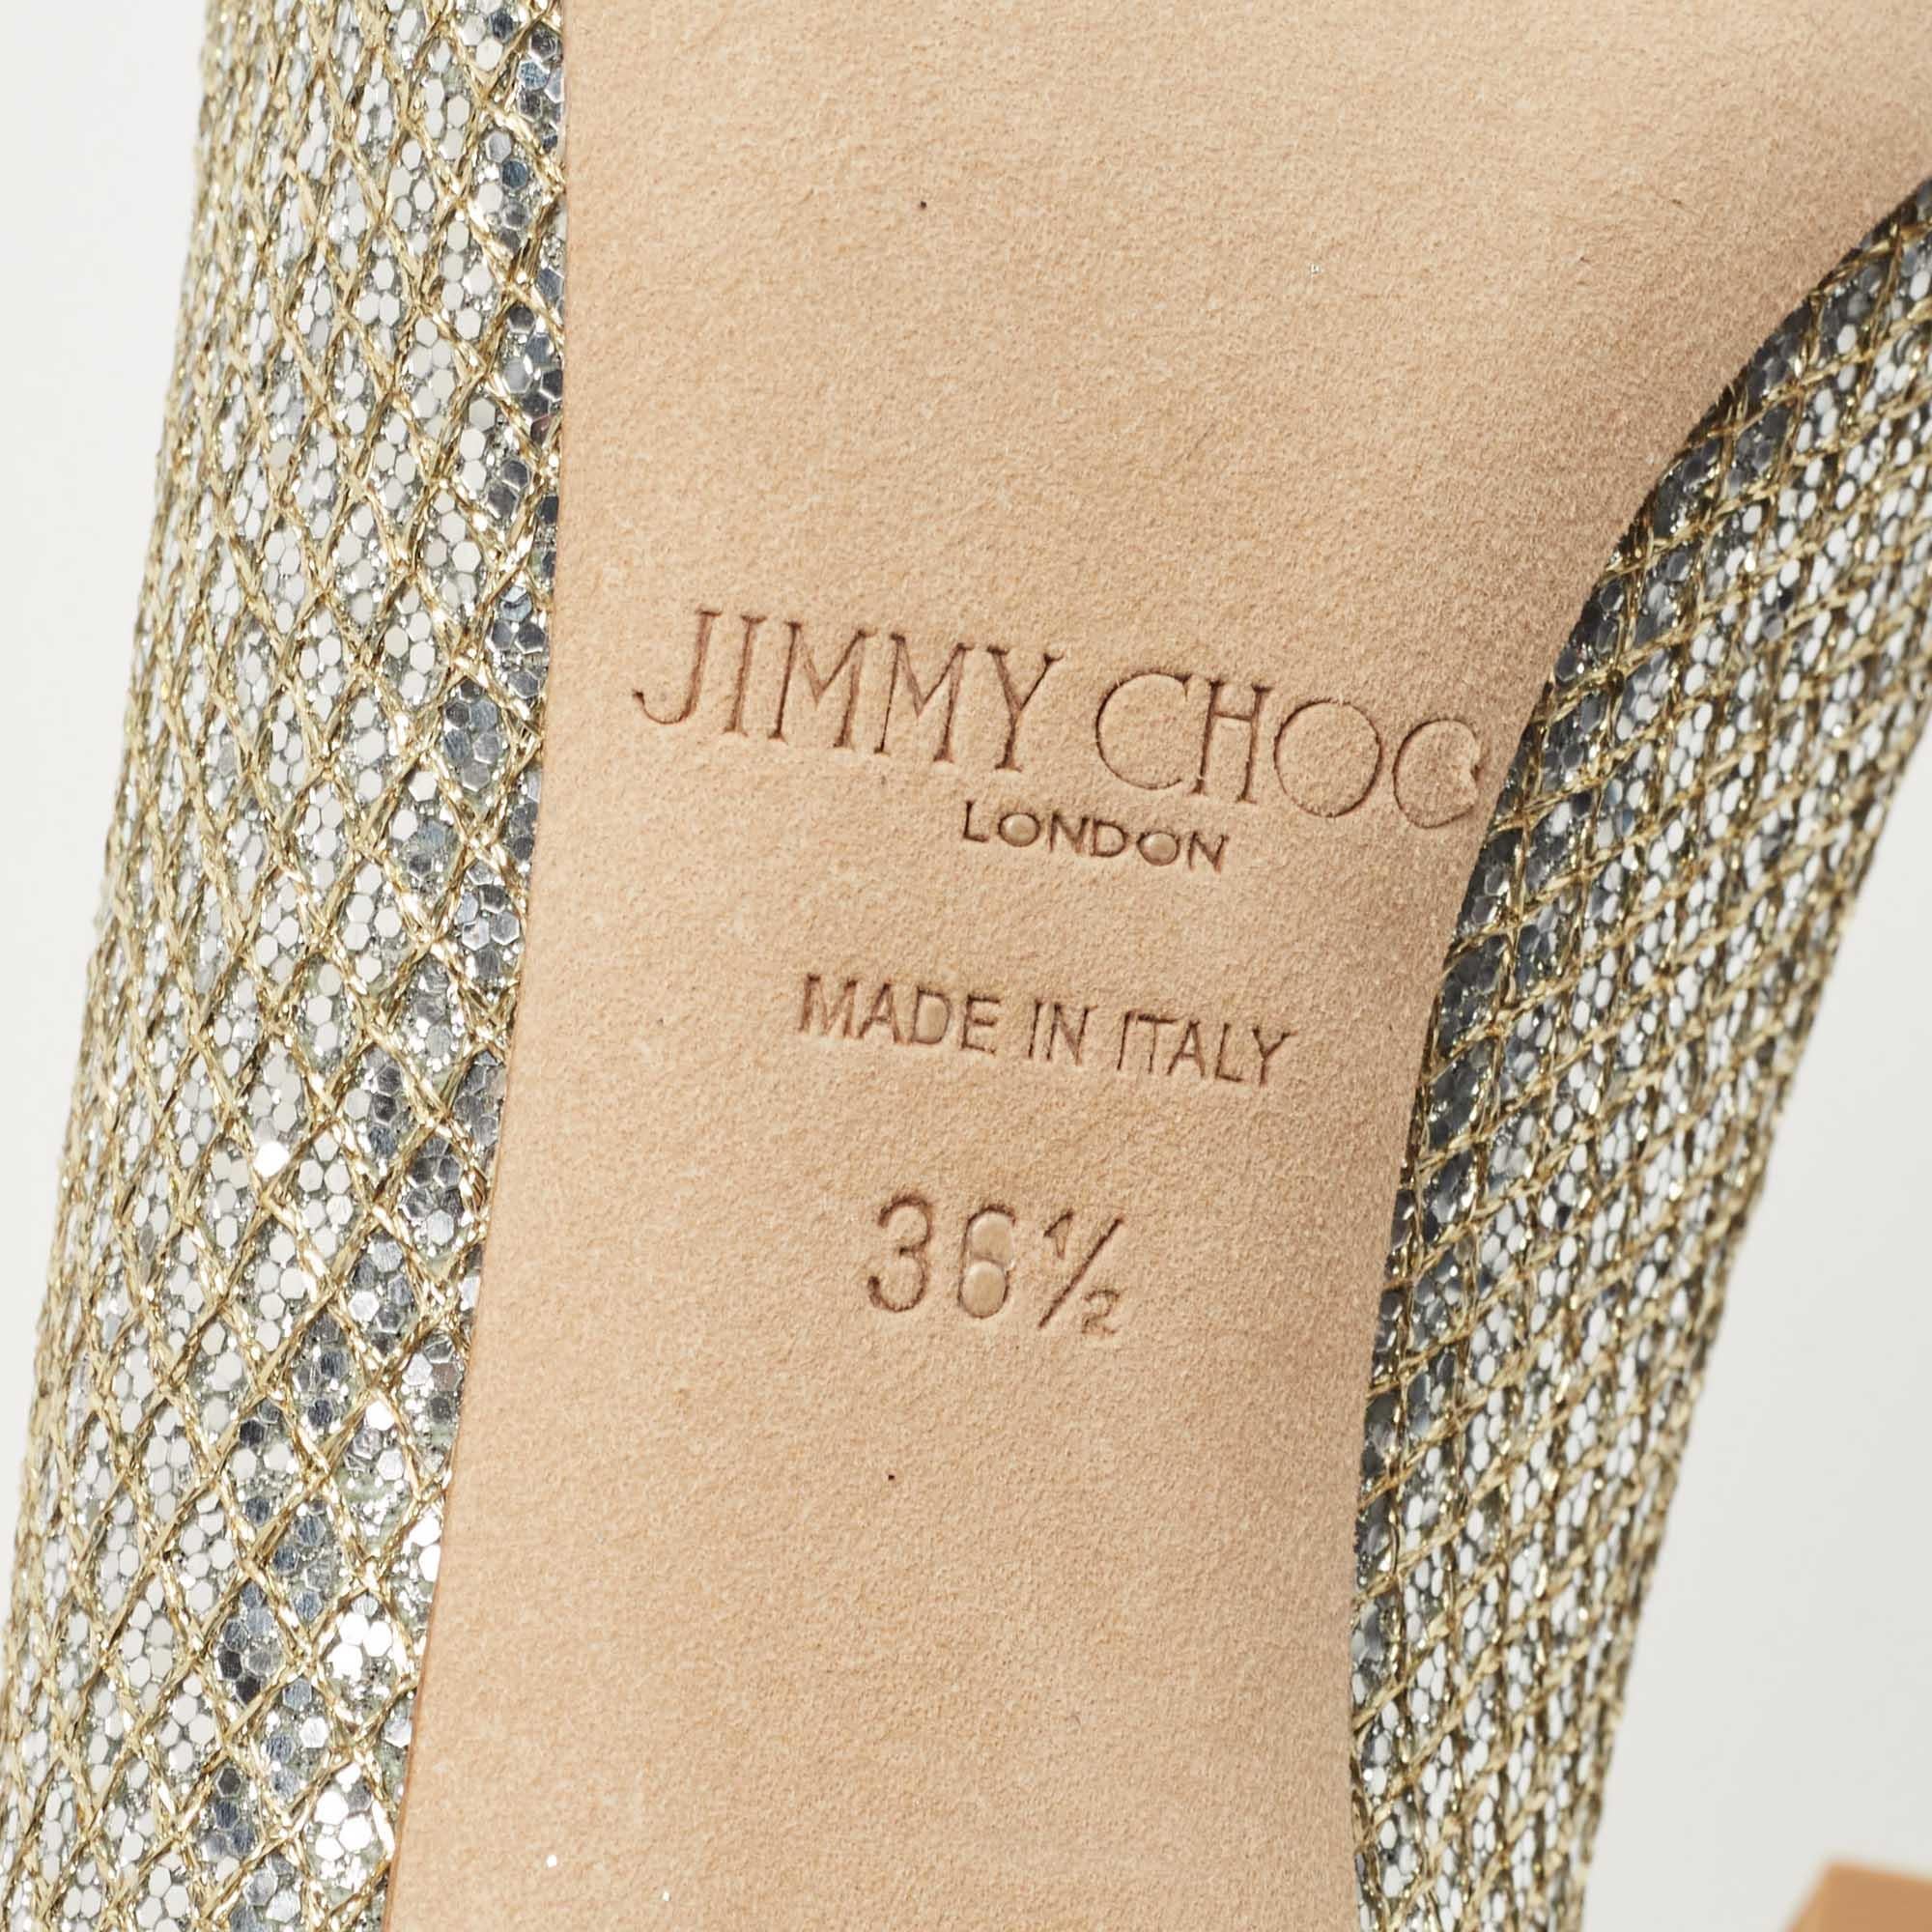 Jimmy Choo Silver Glitter Romy Pointed Toe Pumps  2